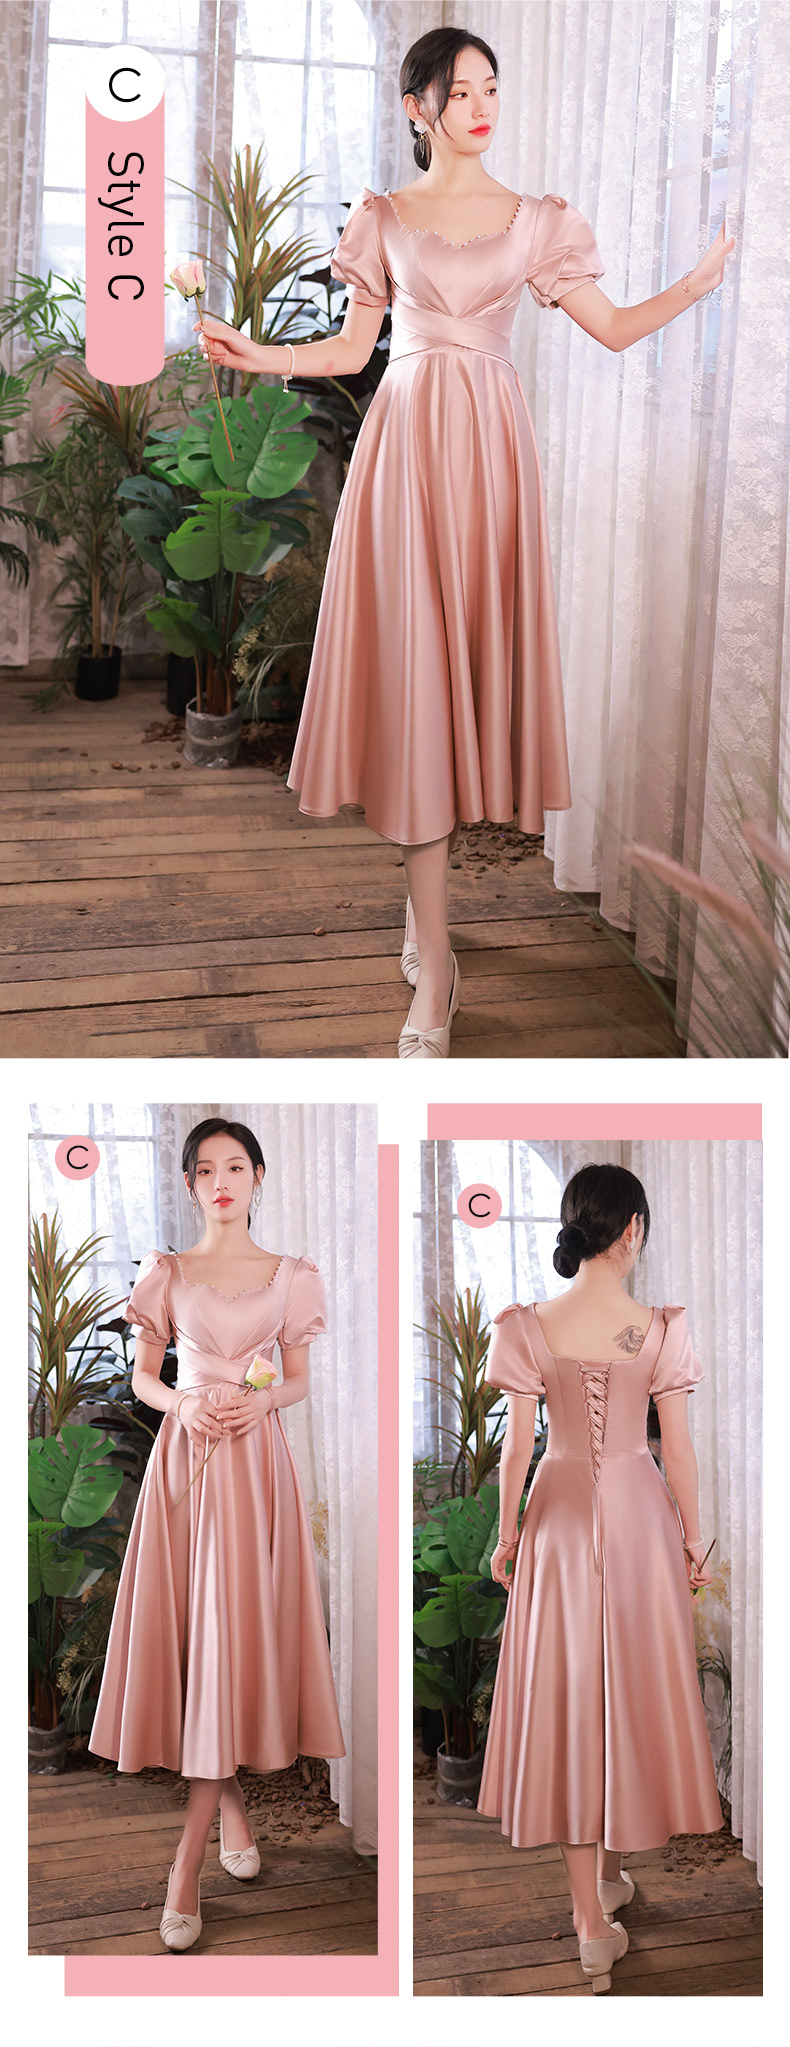 Simple-Pink-Satin-Plus-Size-Midi-Bridesmaid-Dress-Formal-Gown19.jpg